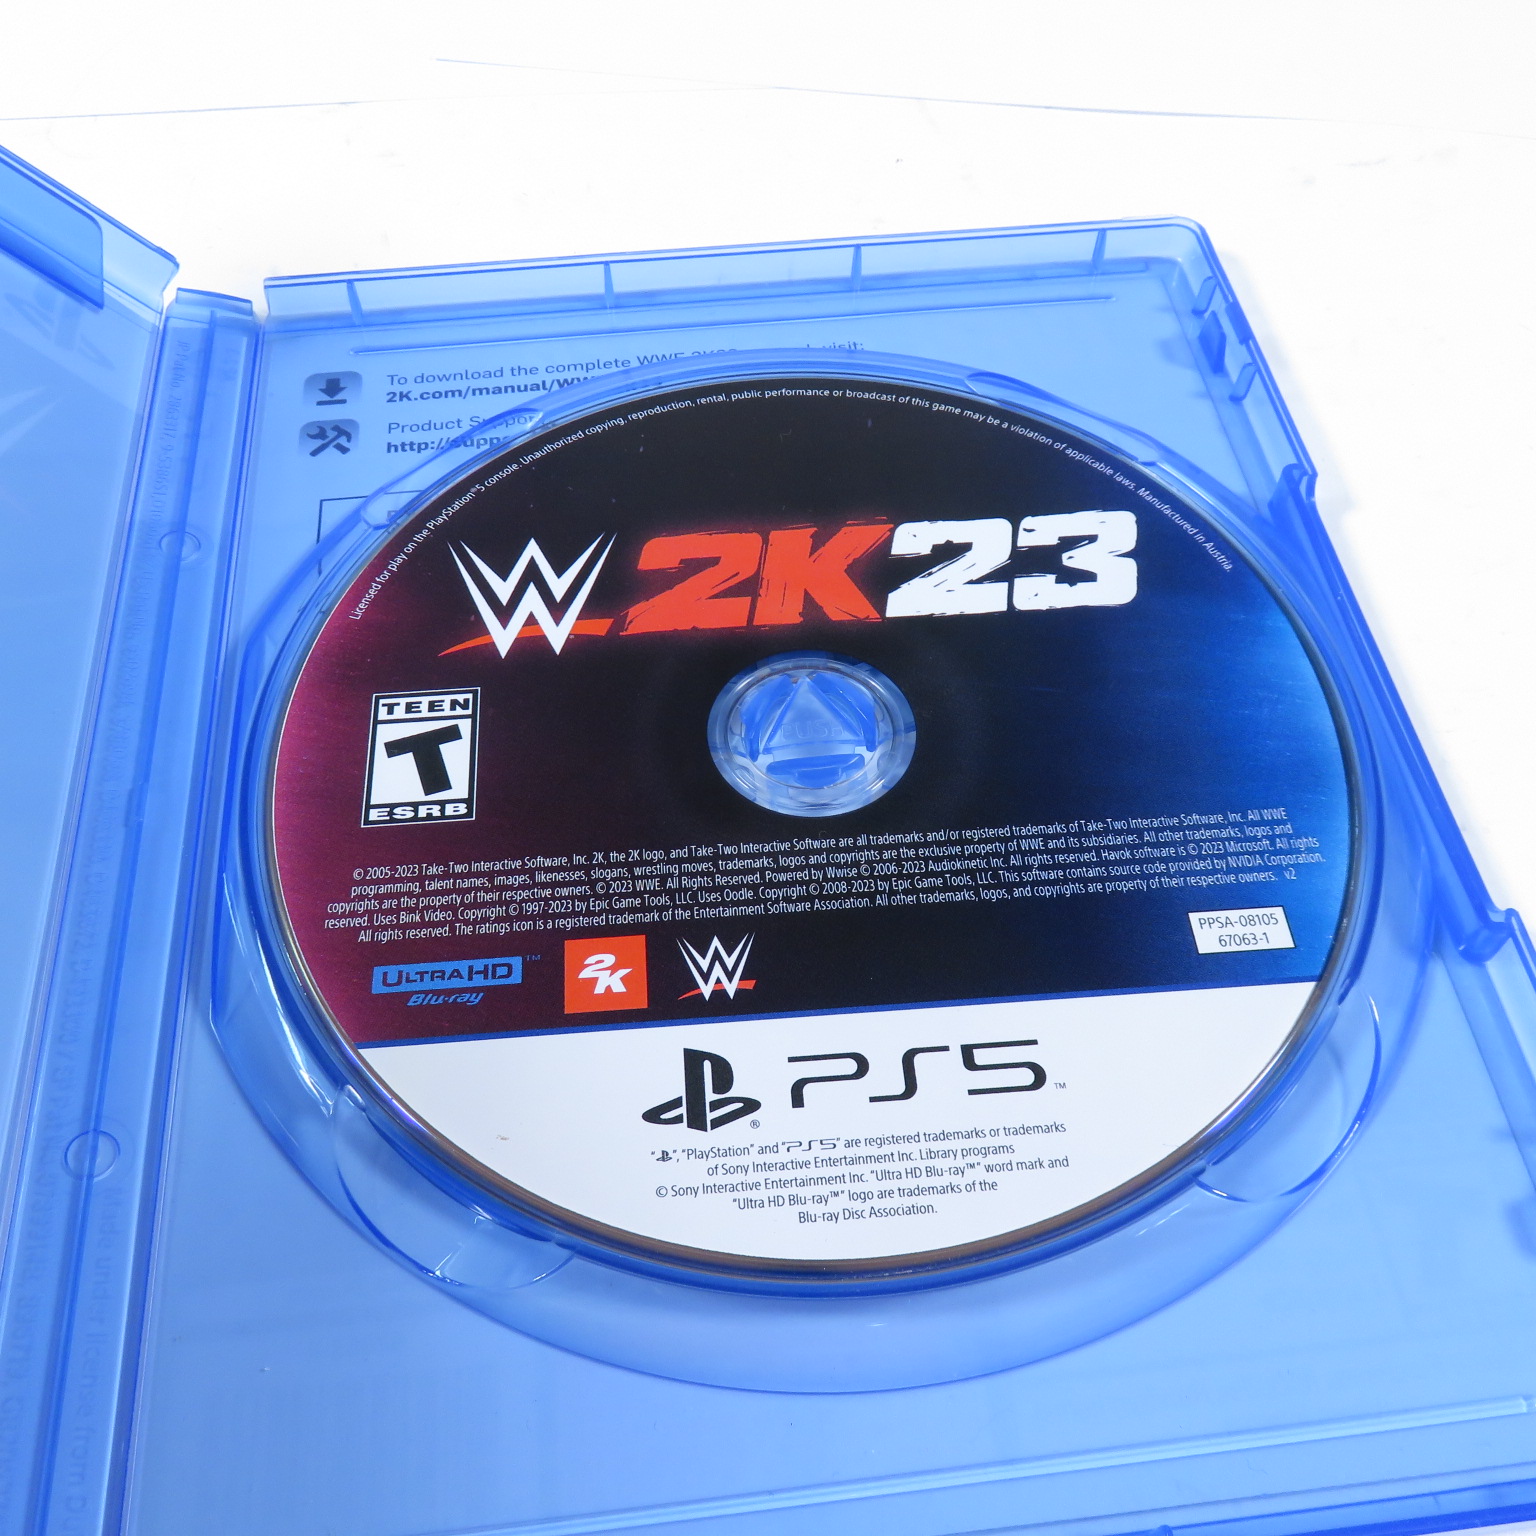 2K Games Videogioco WWE 2K23 per PlayStation 4